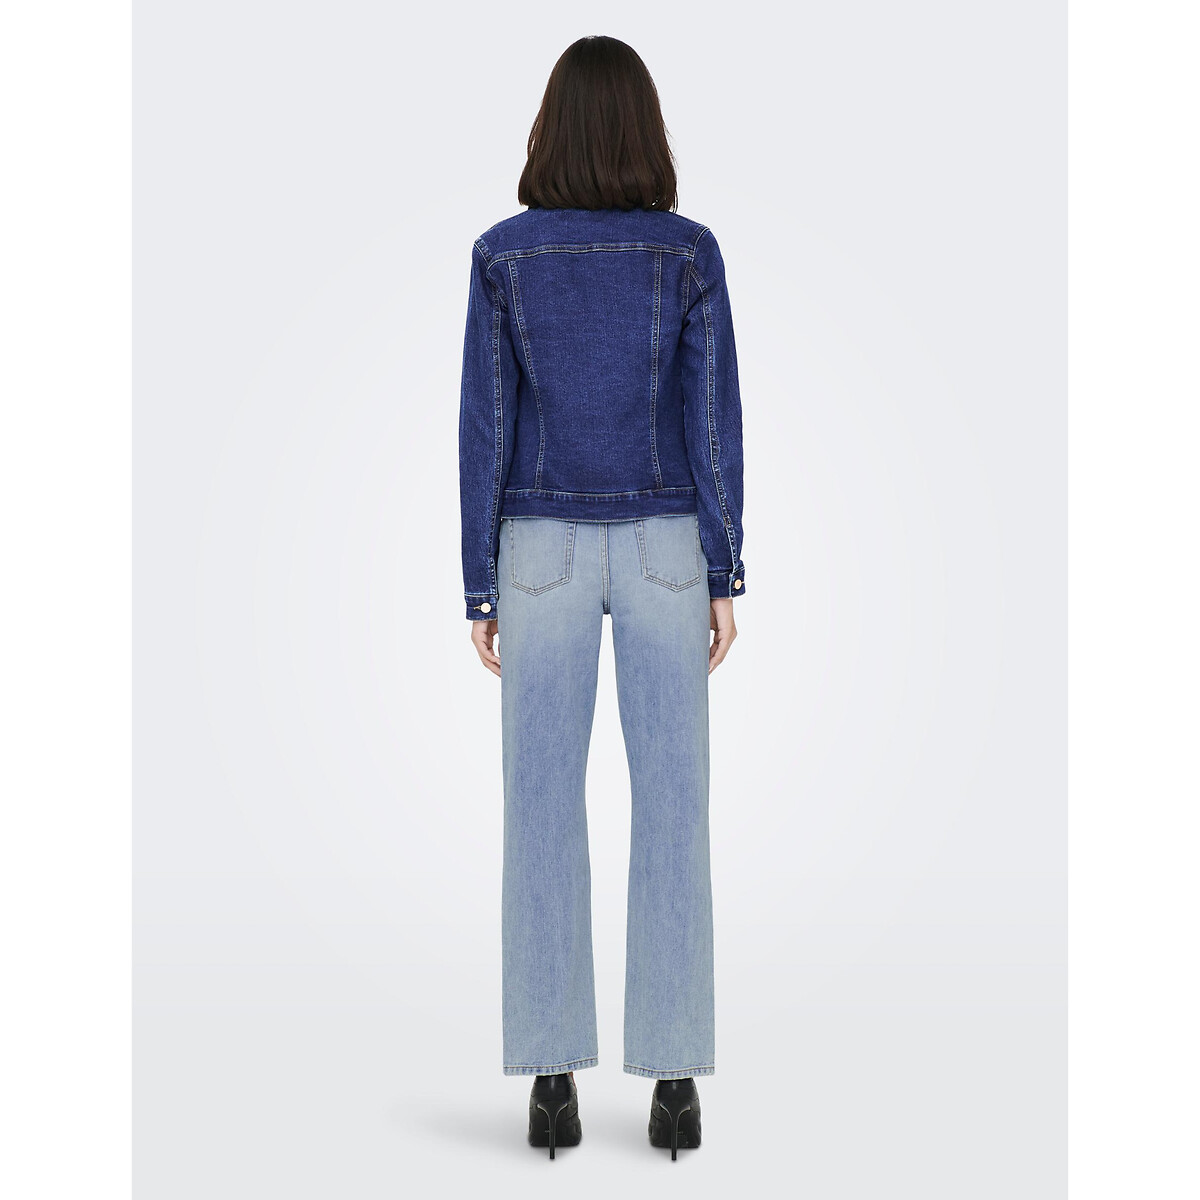 Жакет Из джинсовой ткани M синий LaRedoute, размер M - фото 4